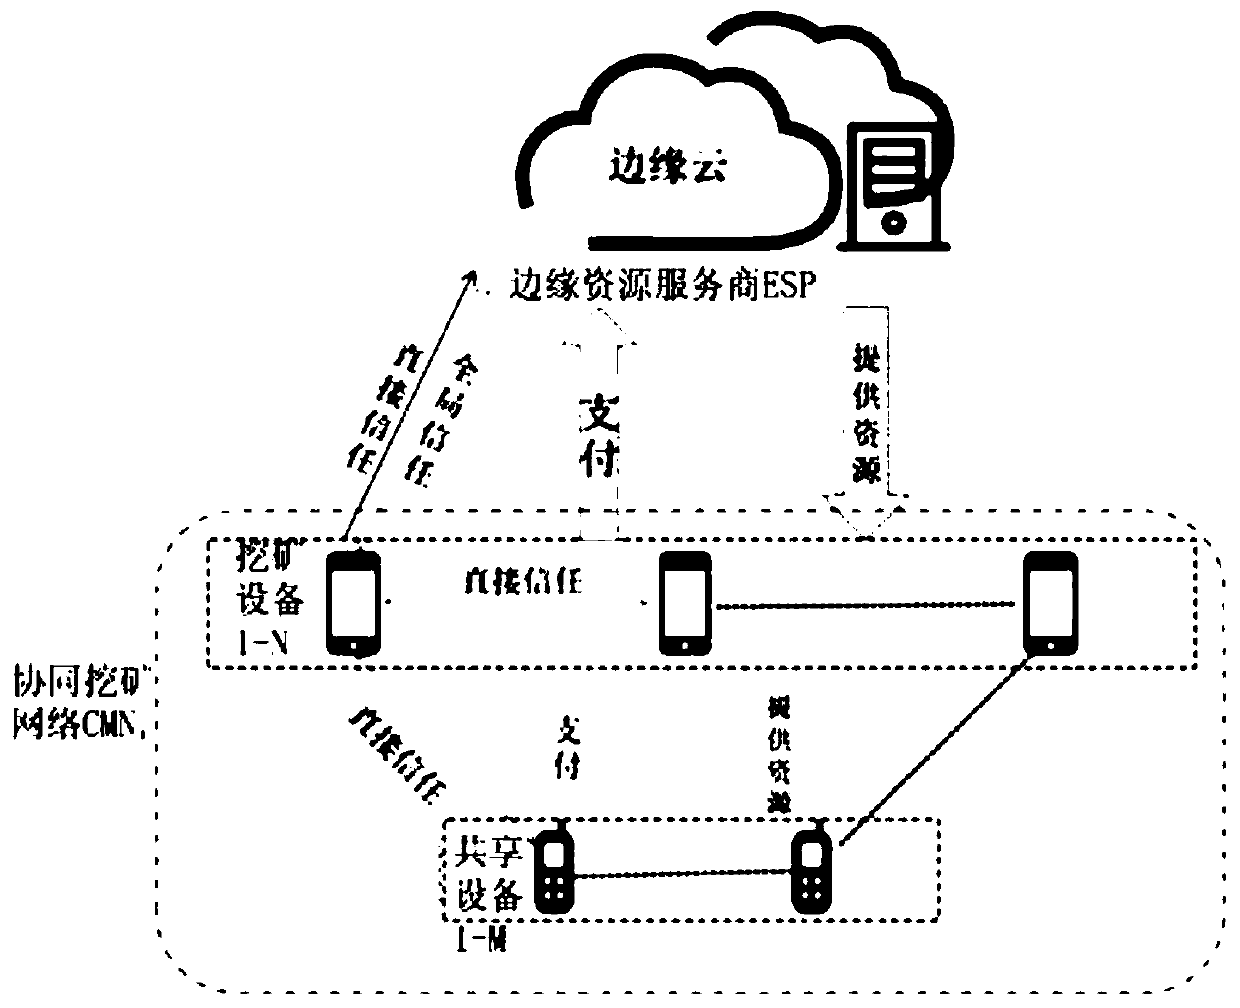 Edge network resource allocation method for mobile block chain